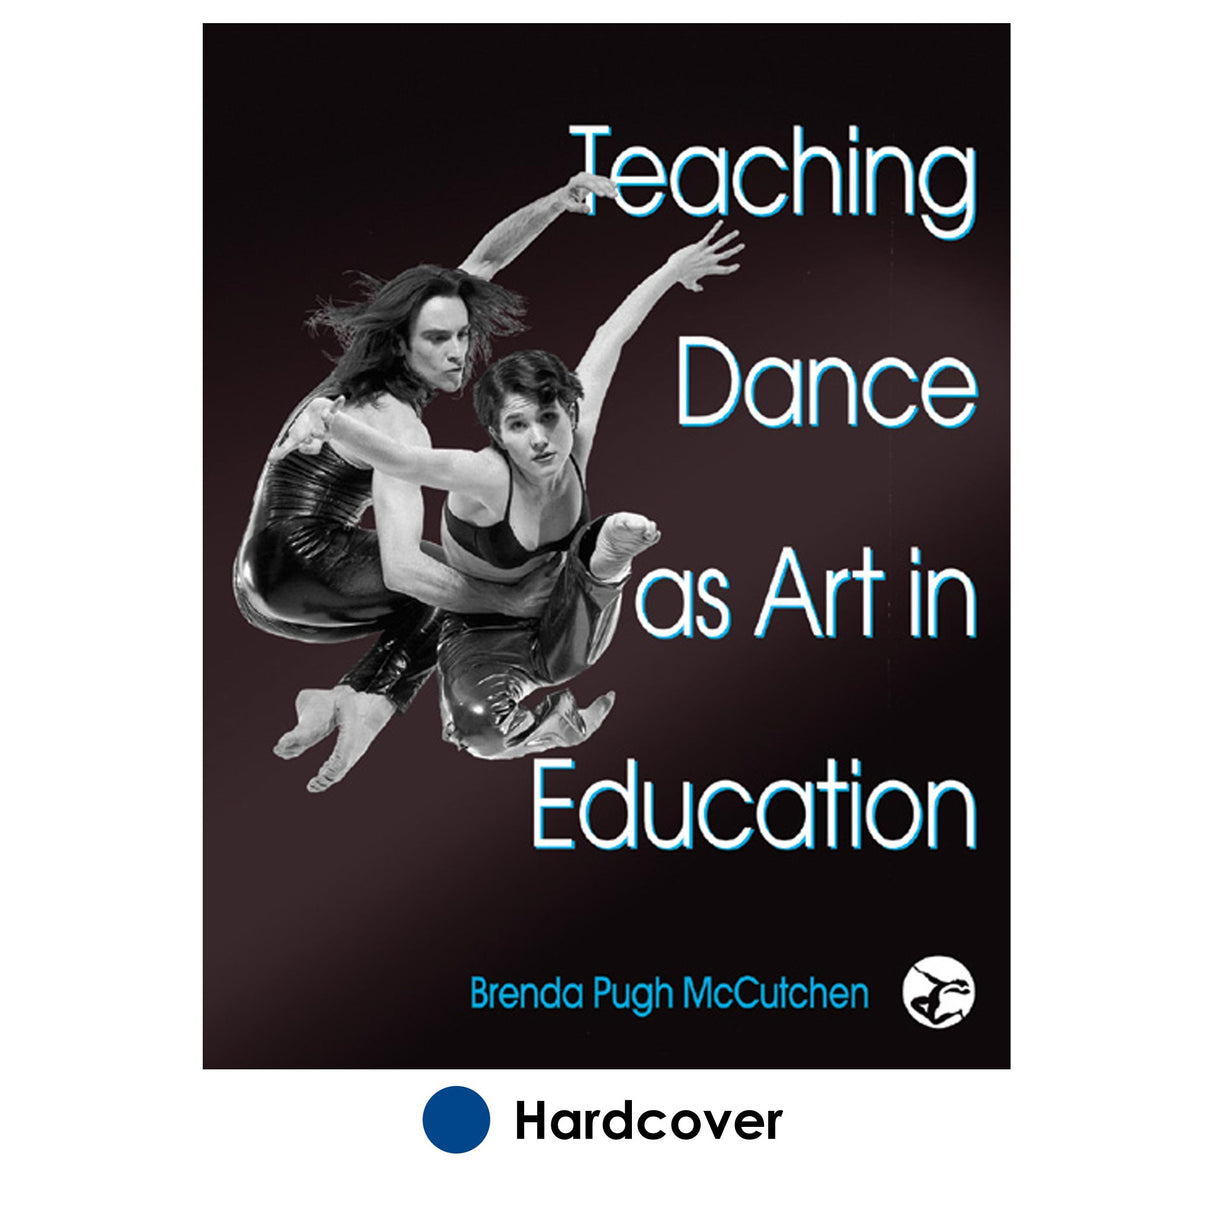 Teaching Dance As Art in Education